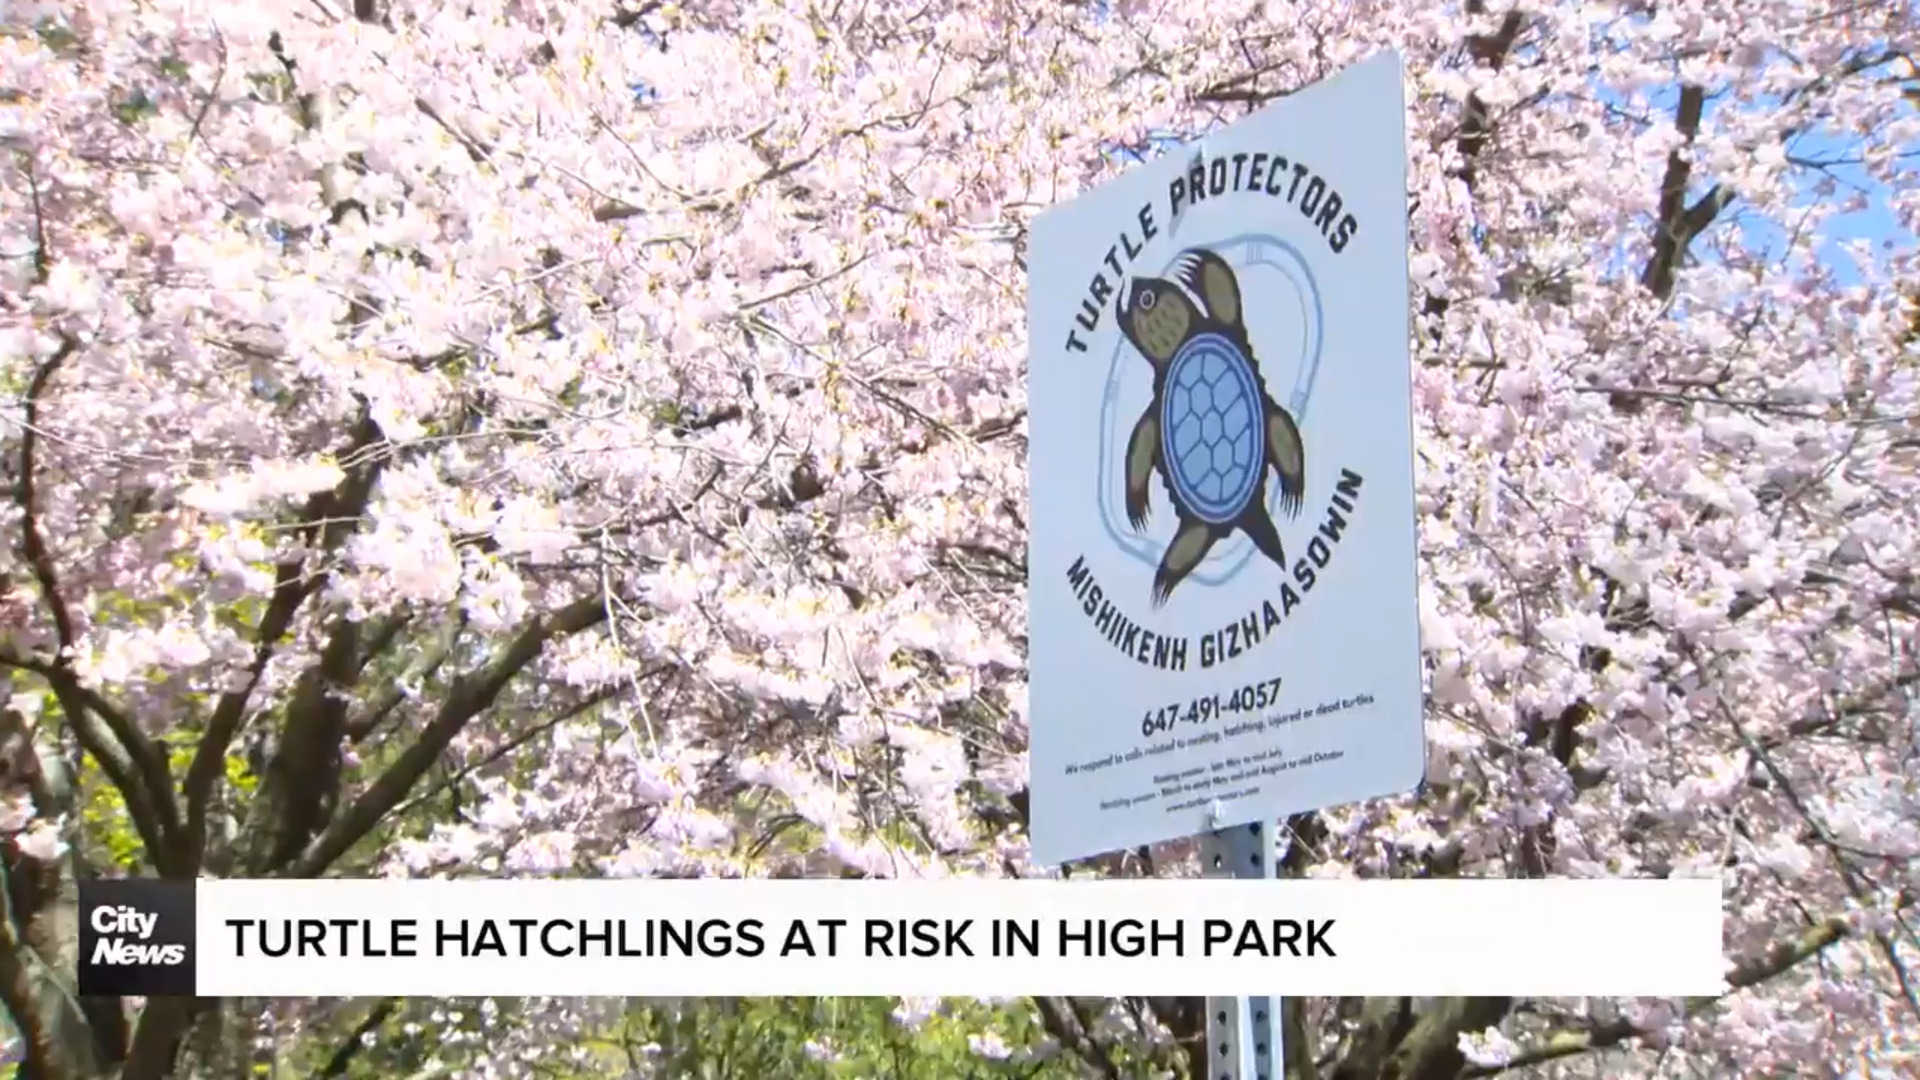 Turtle hatchlings at risk in High Park